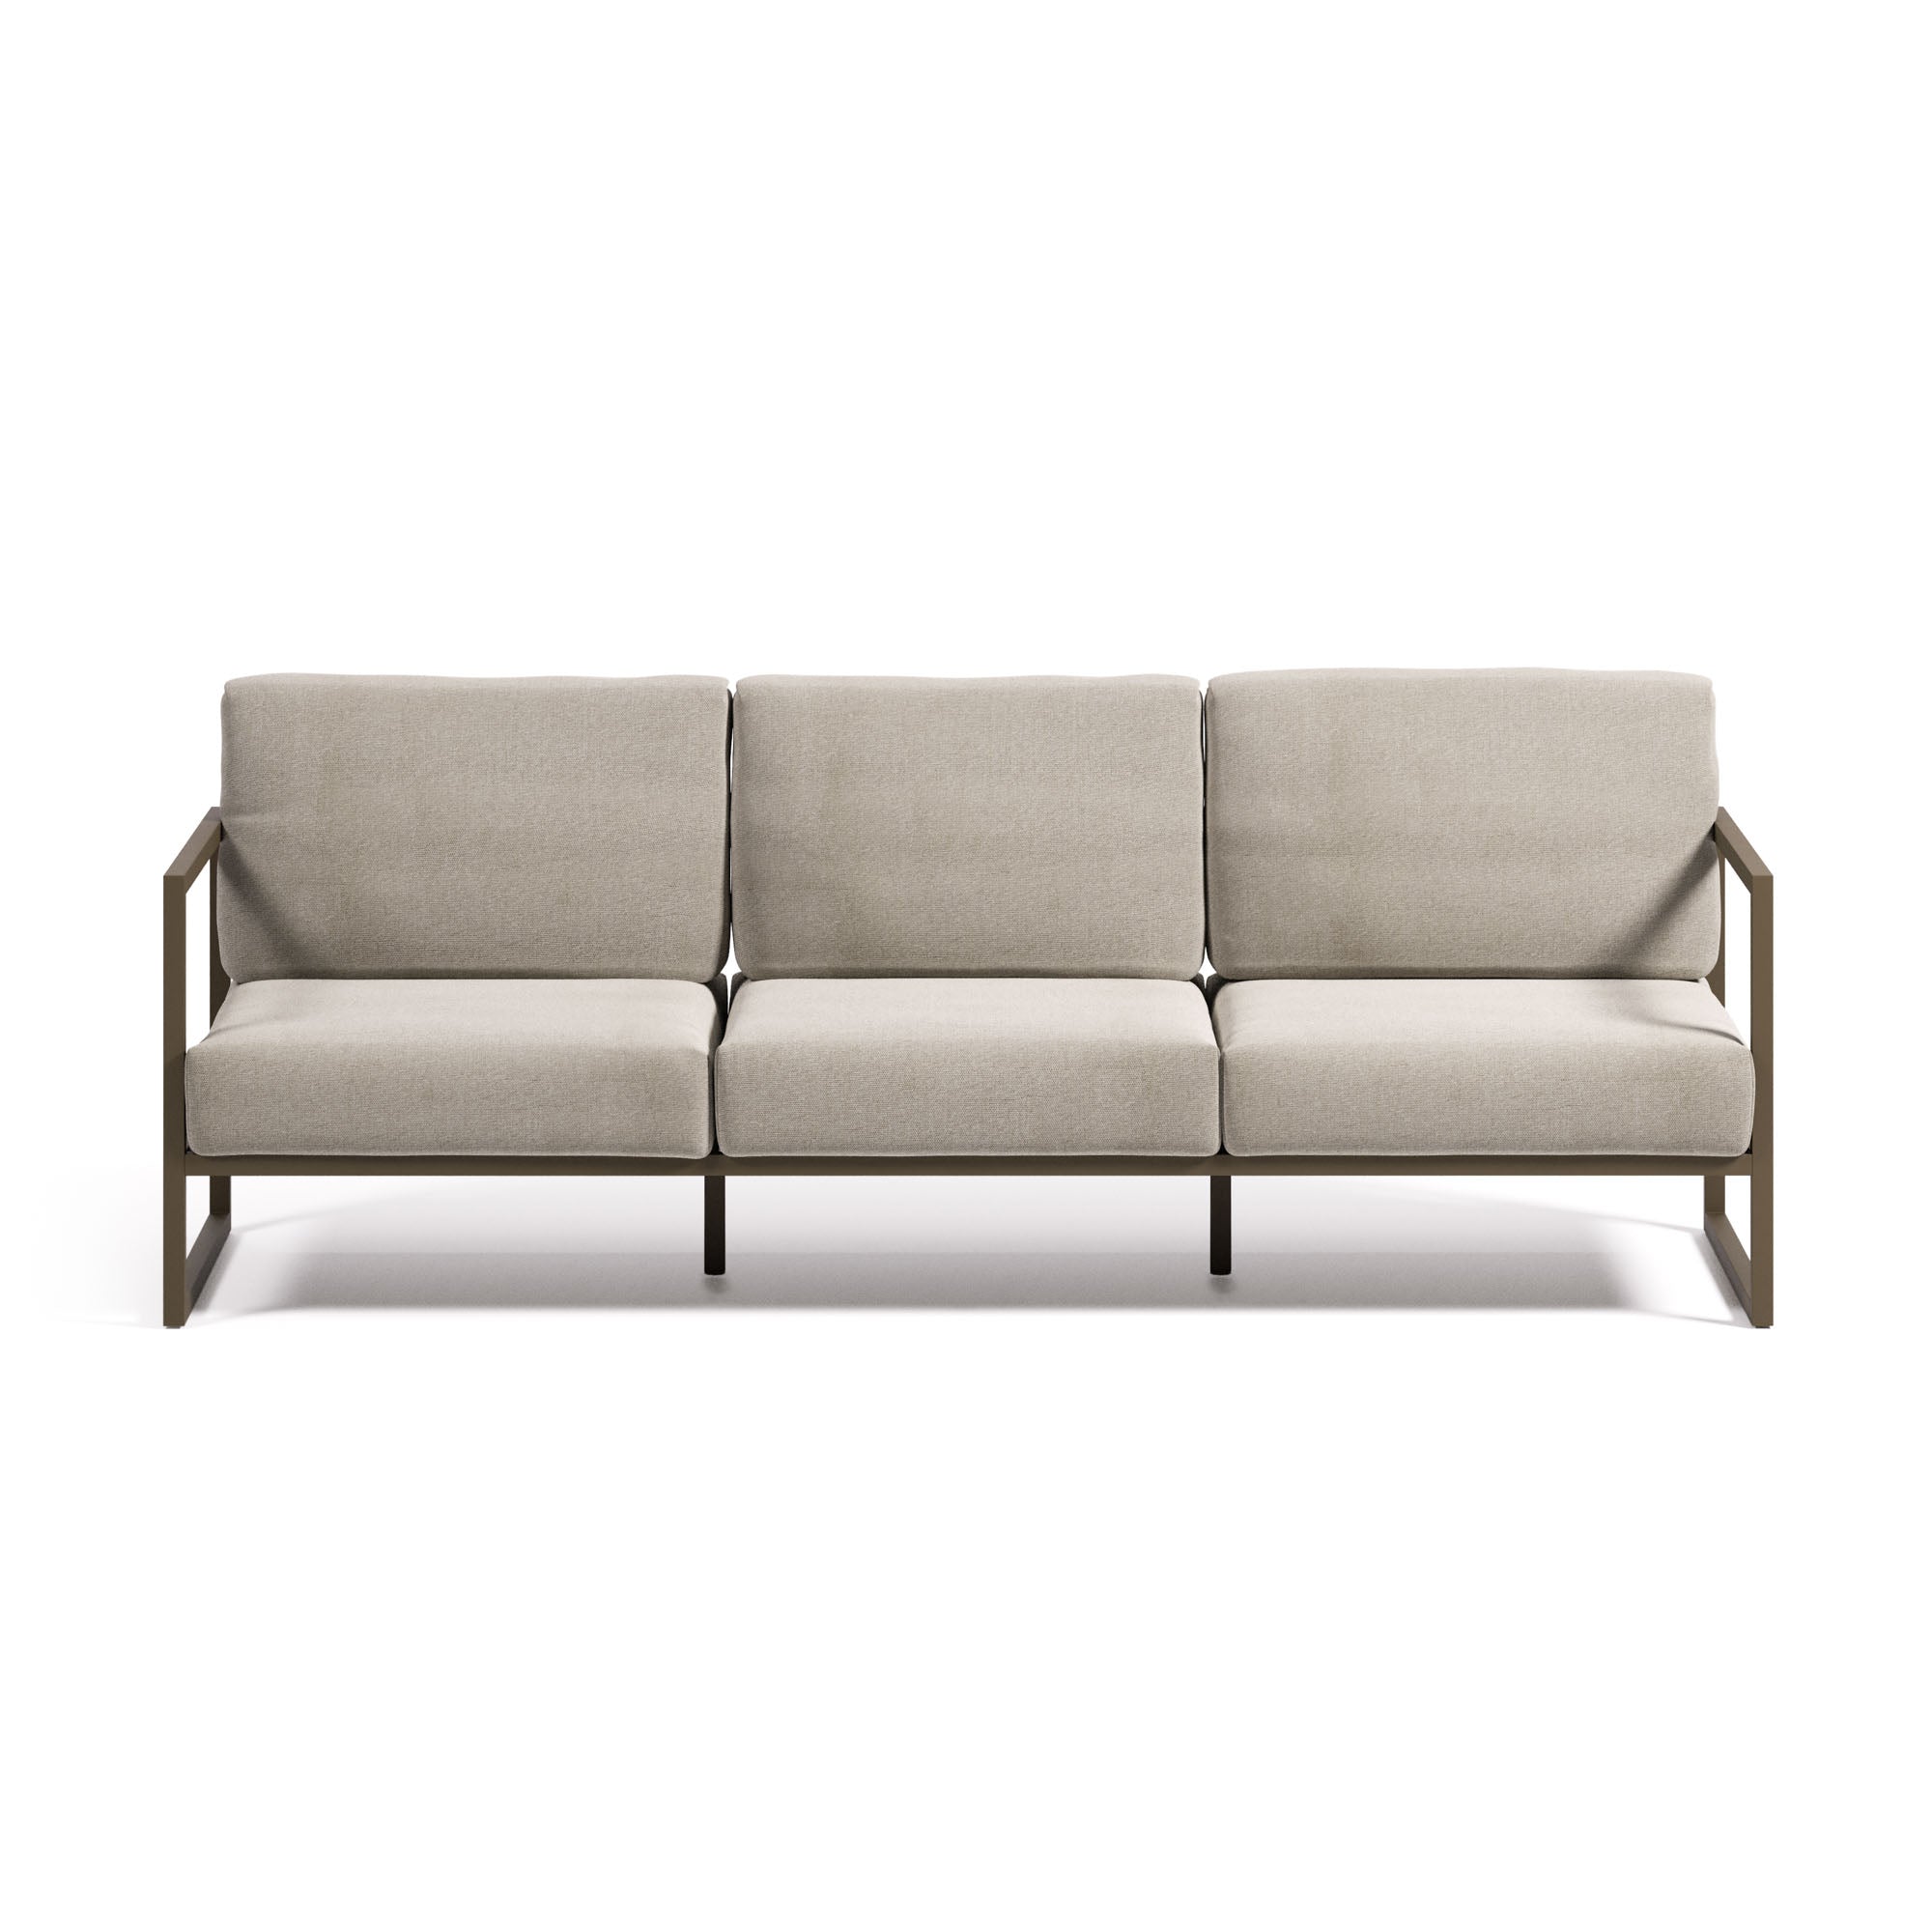 Comova 100% outdoor 3-seater sofa in light grey and green aluminium, 222 cm